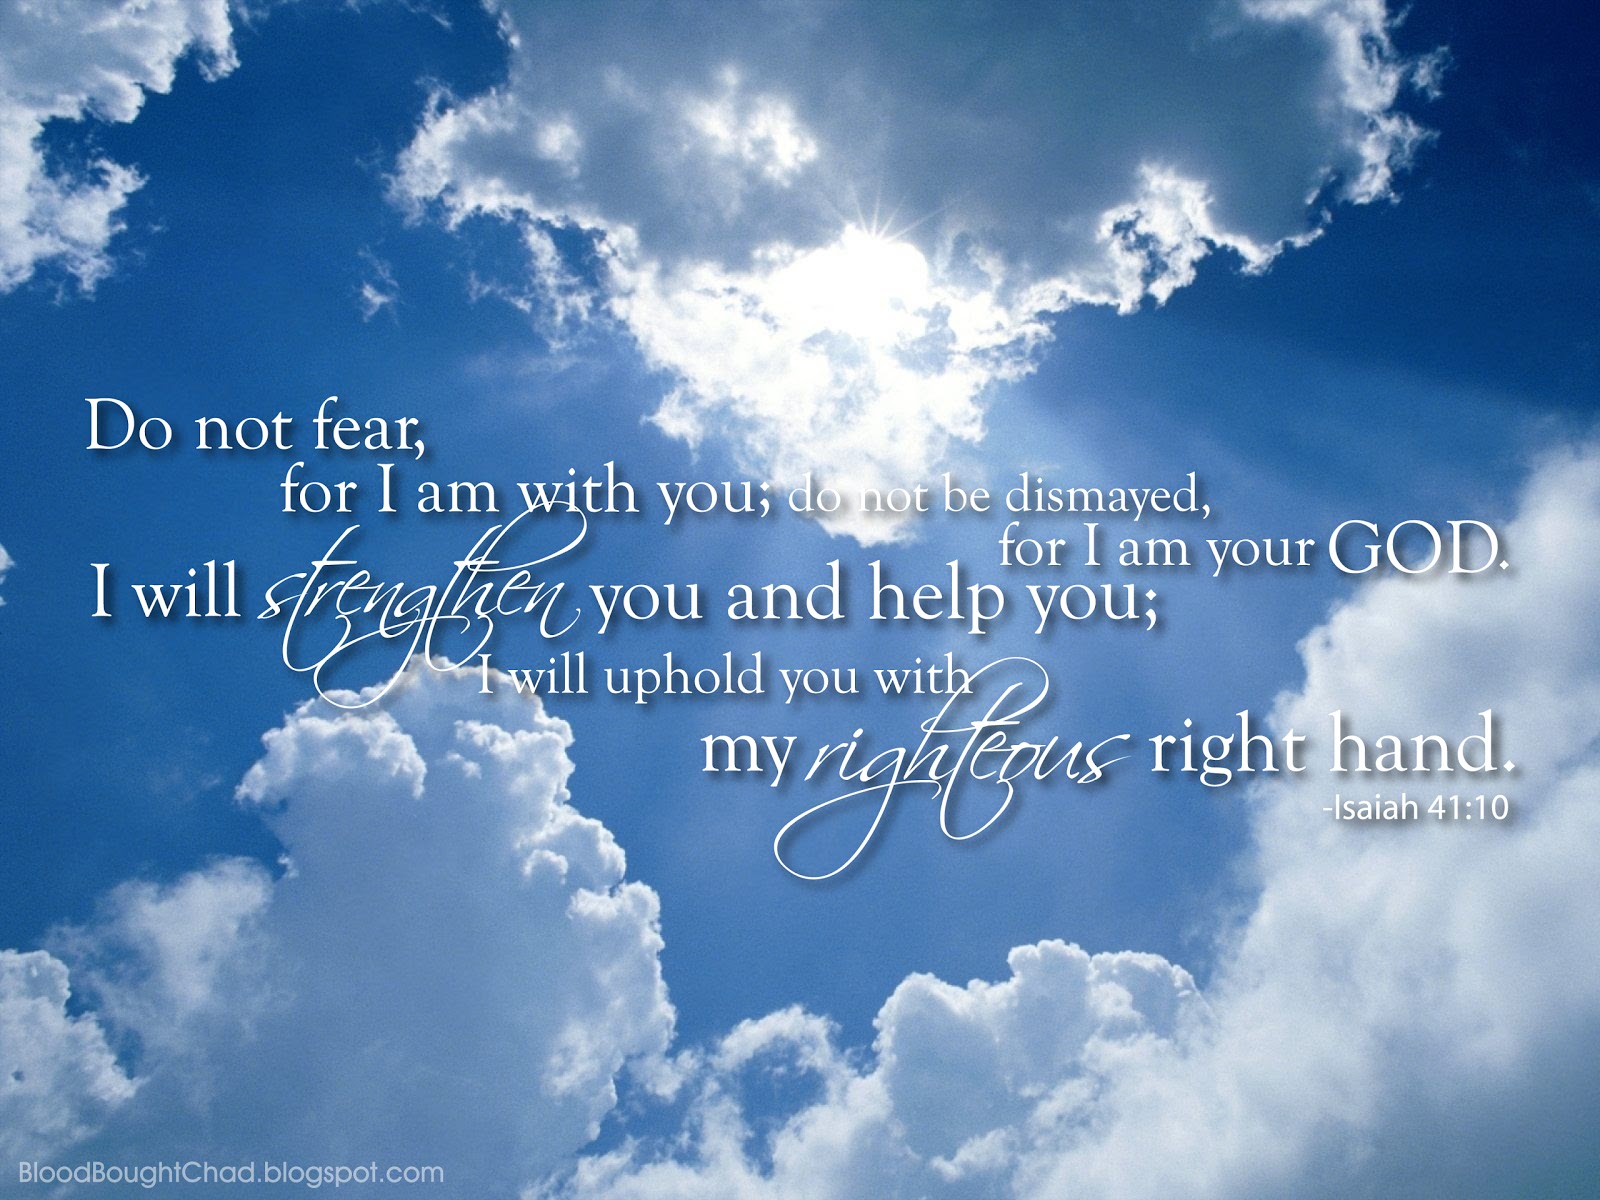 Isaiah 41:10. Free Christian Image